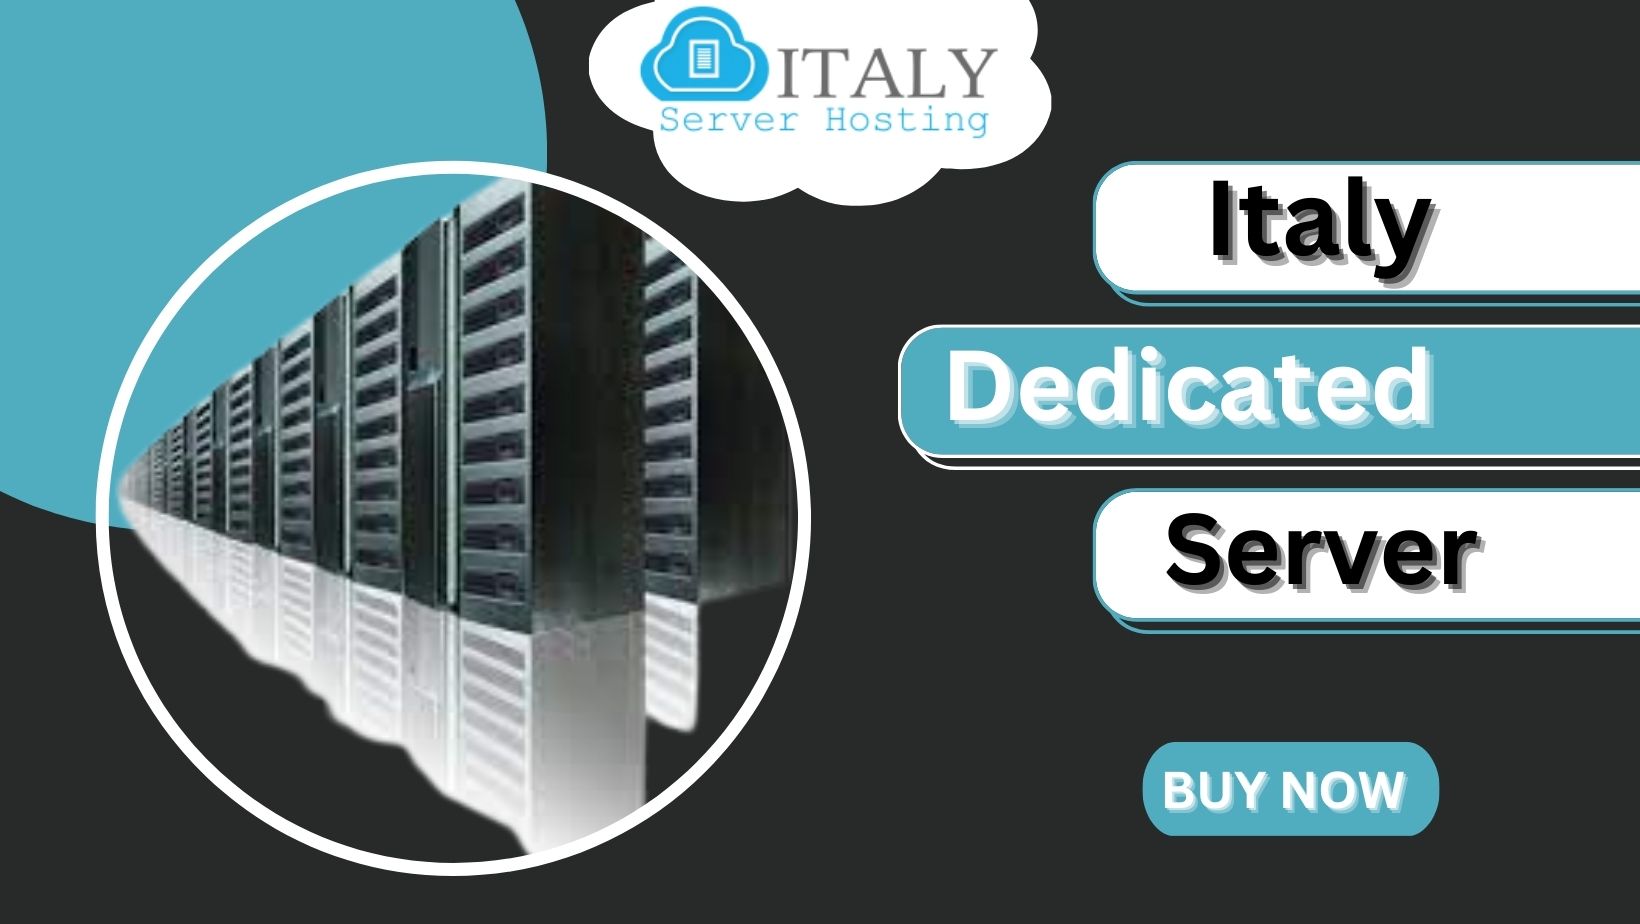 Italy Dedicated Server